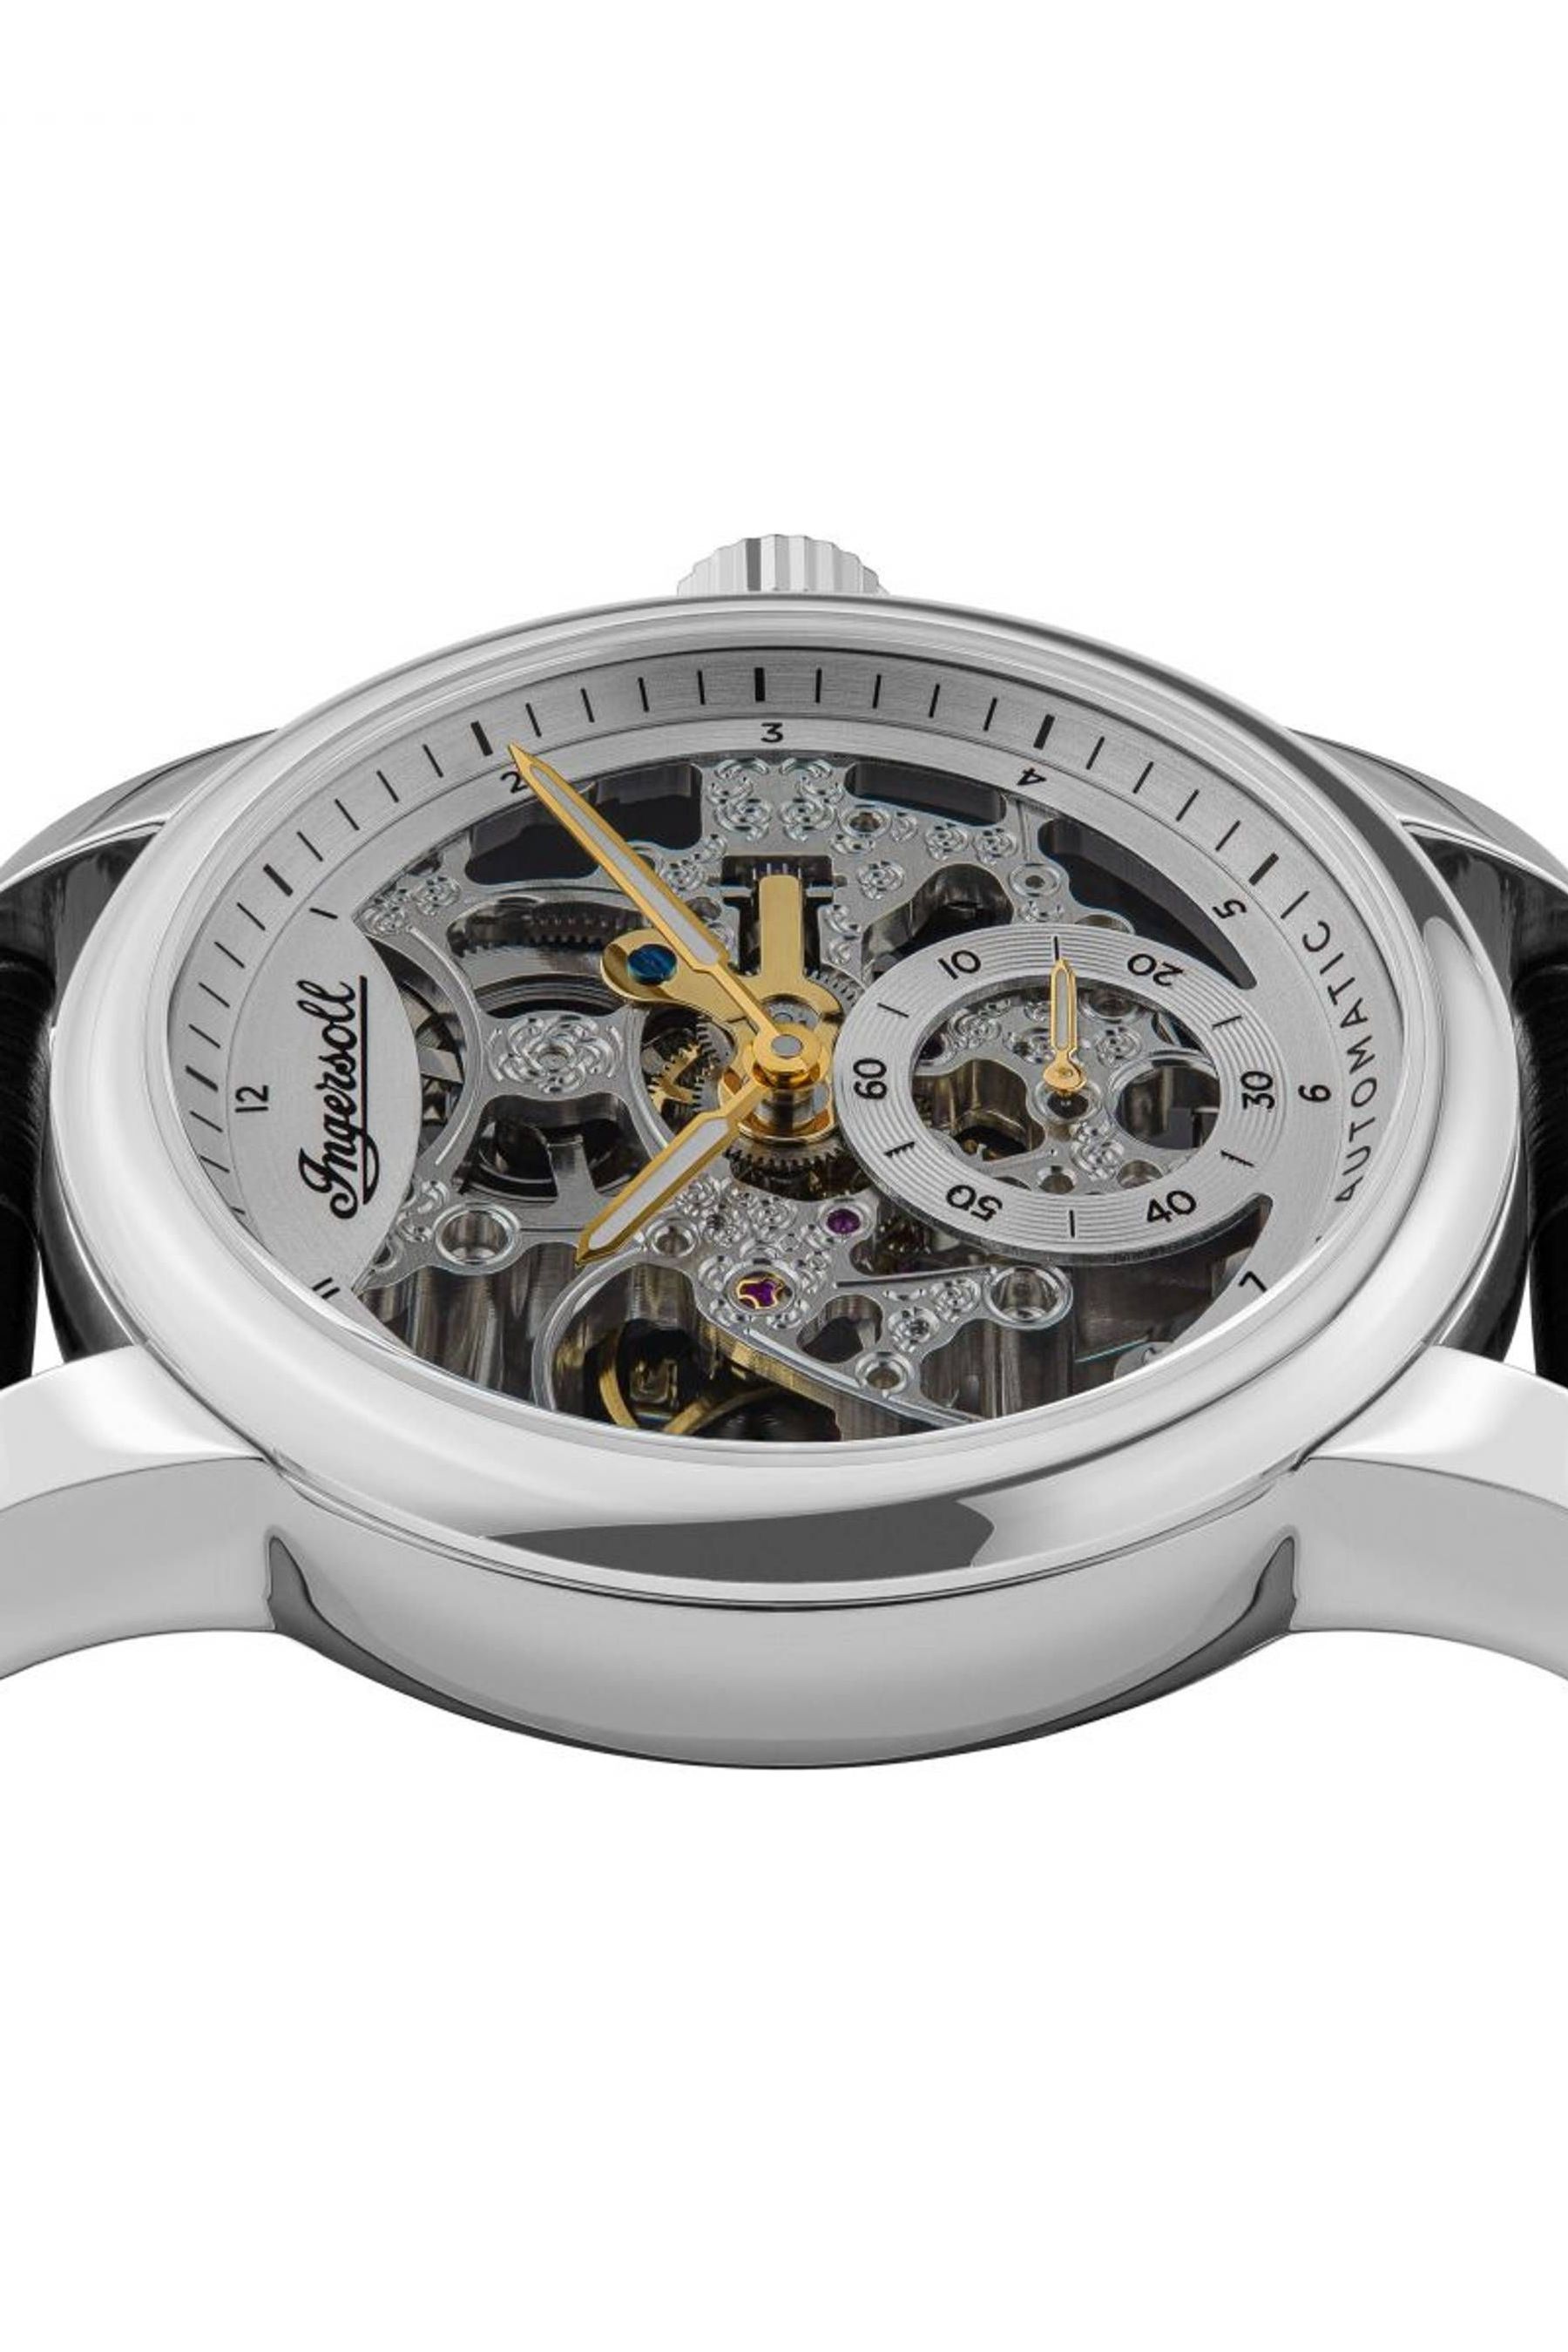 Ingersoll Men's The Baldwin Automatic Watch - I11001 NEW | eBay